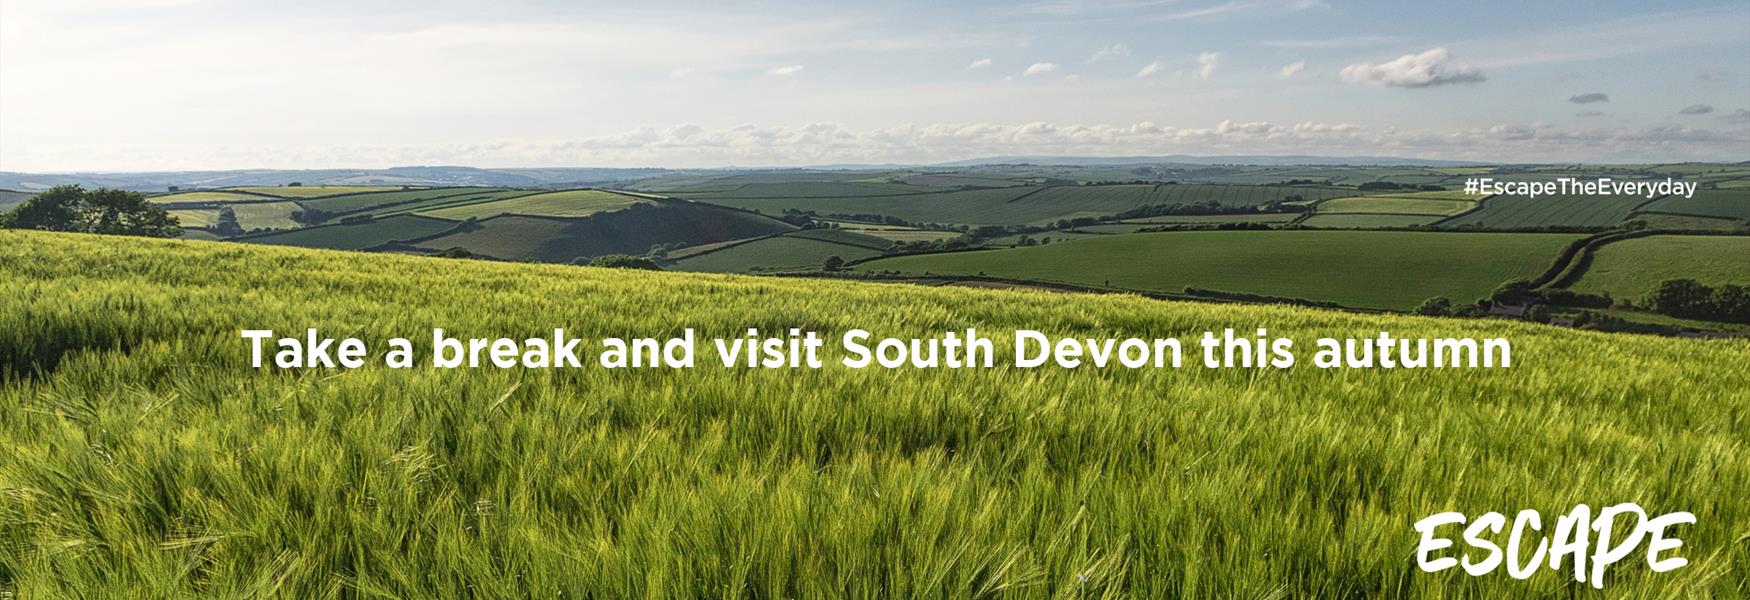 Escape the Everyday in South Devon